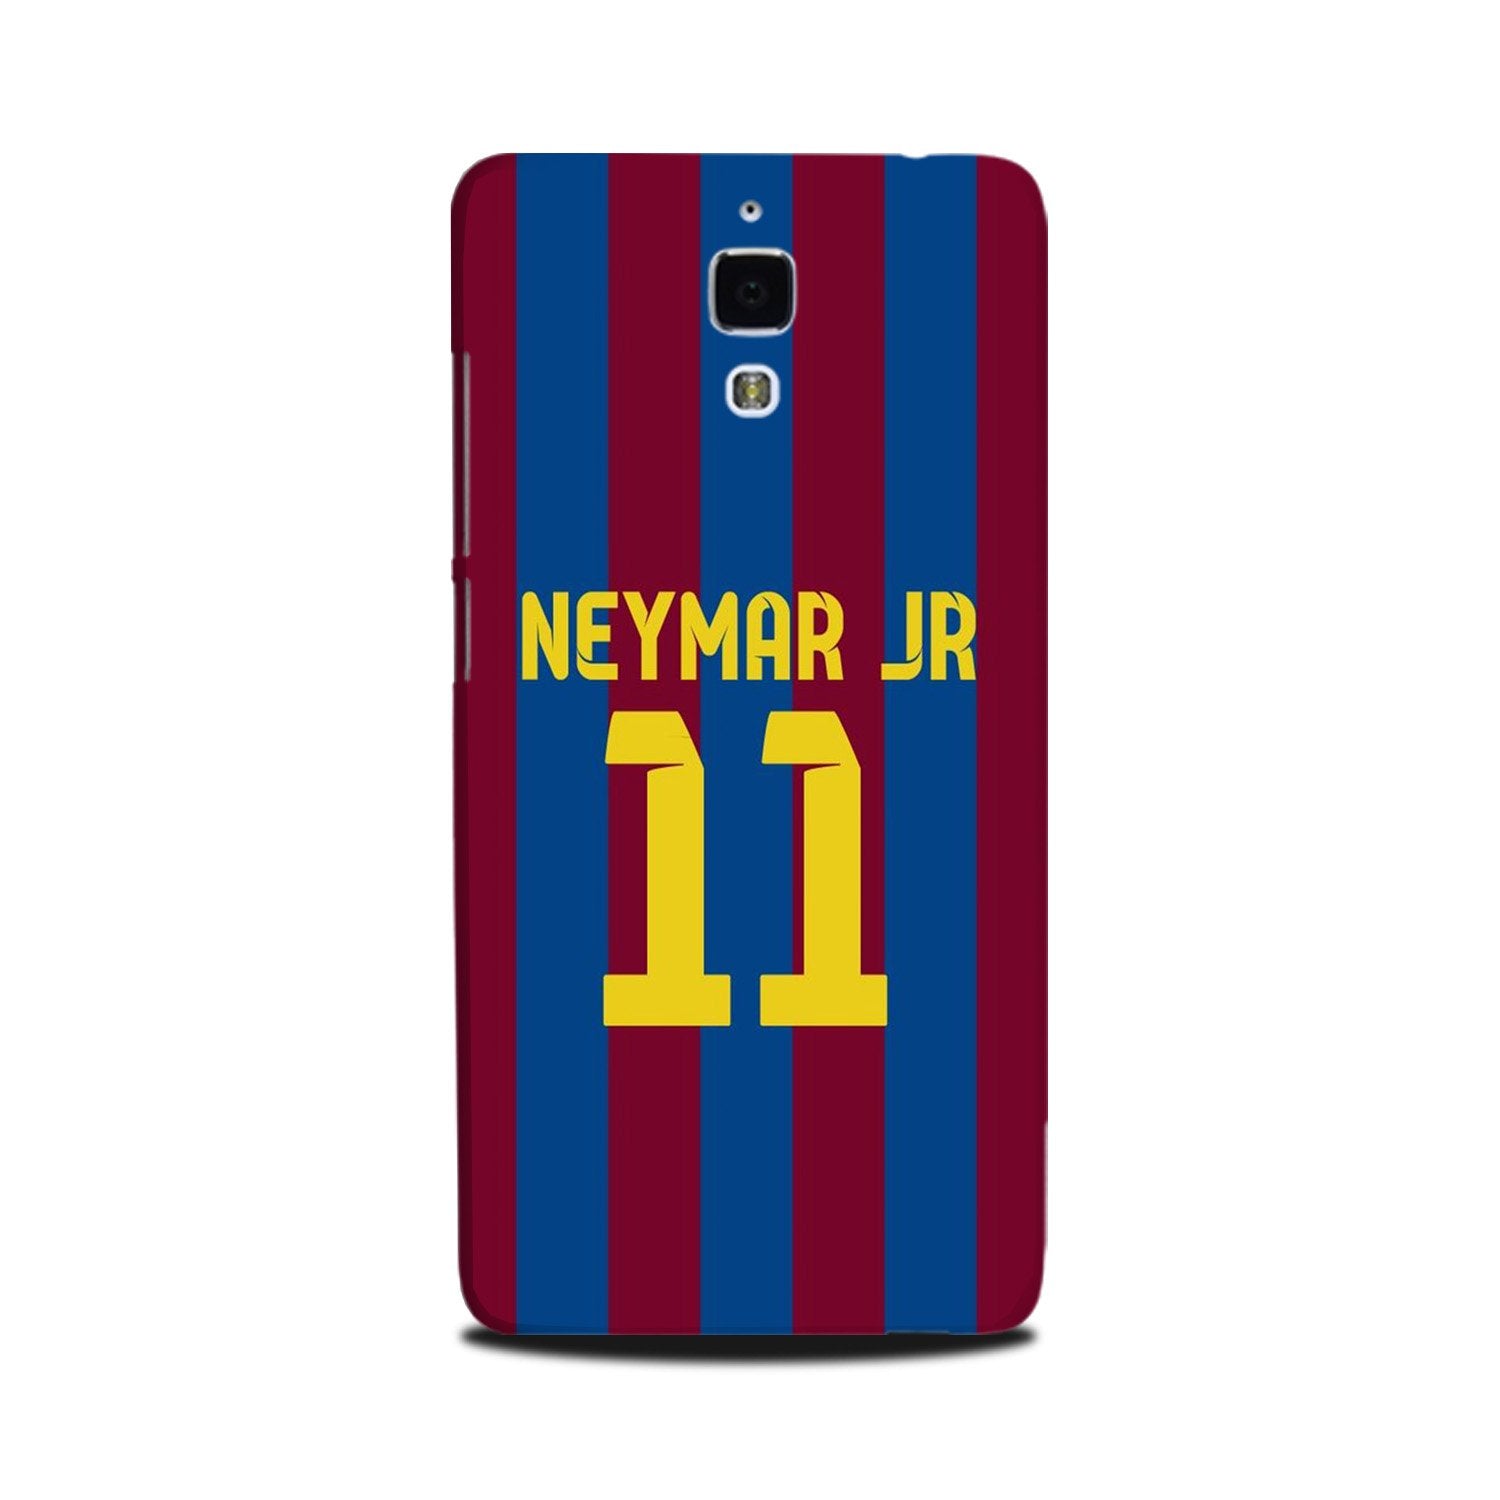 Neymar Jr Case for Mi 4(Design - 162)